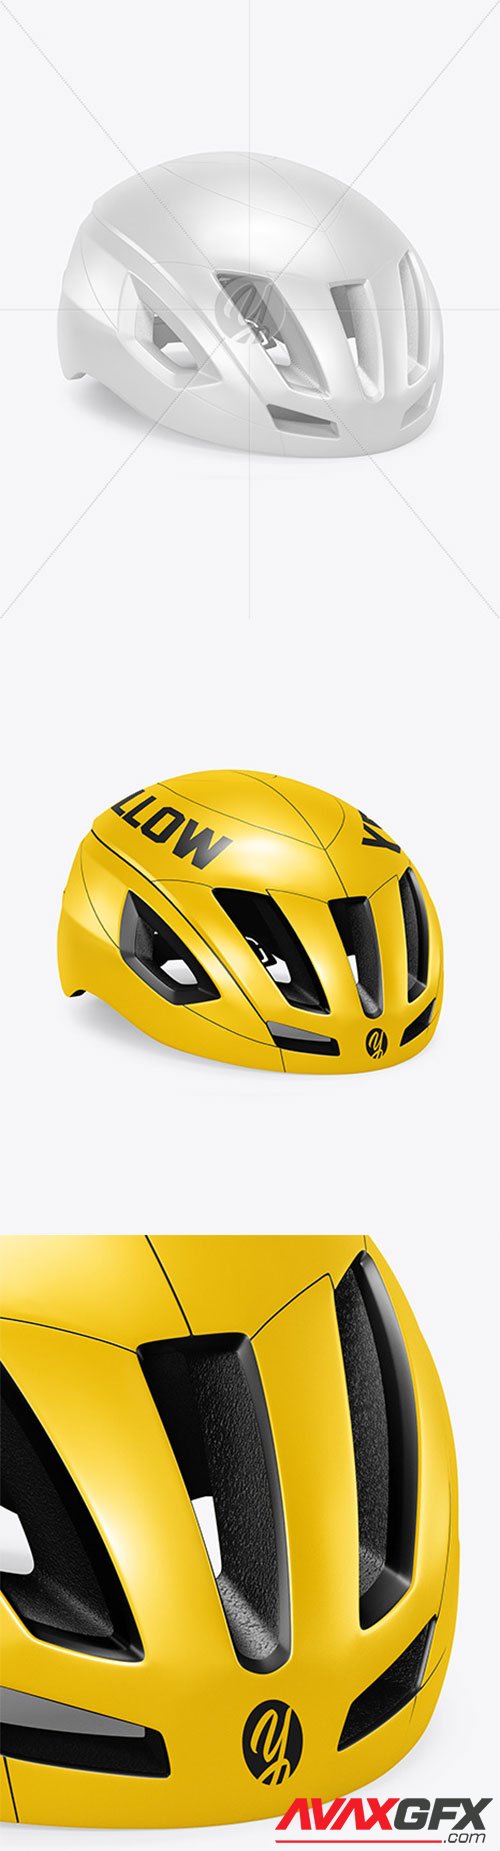 Cycling Helmet Mockup 78943